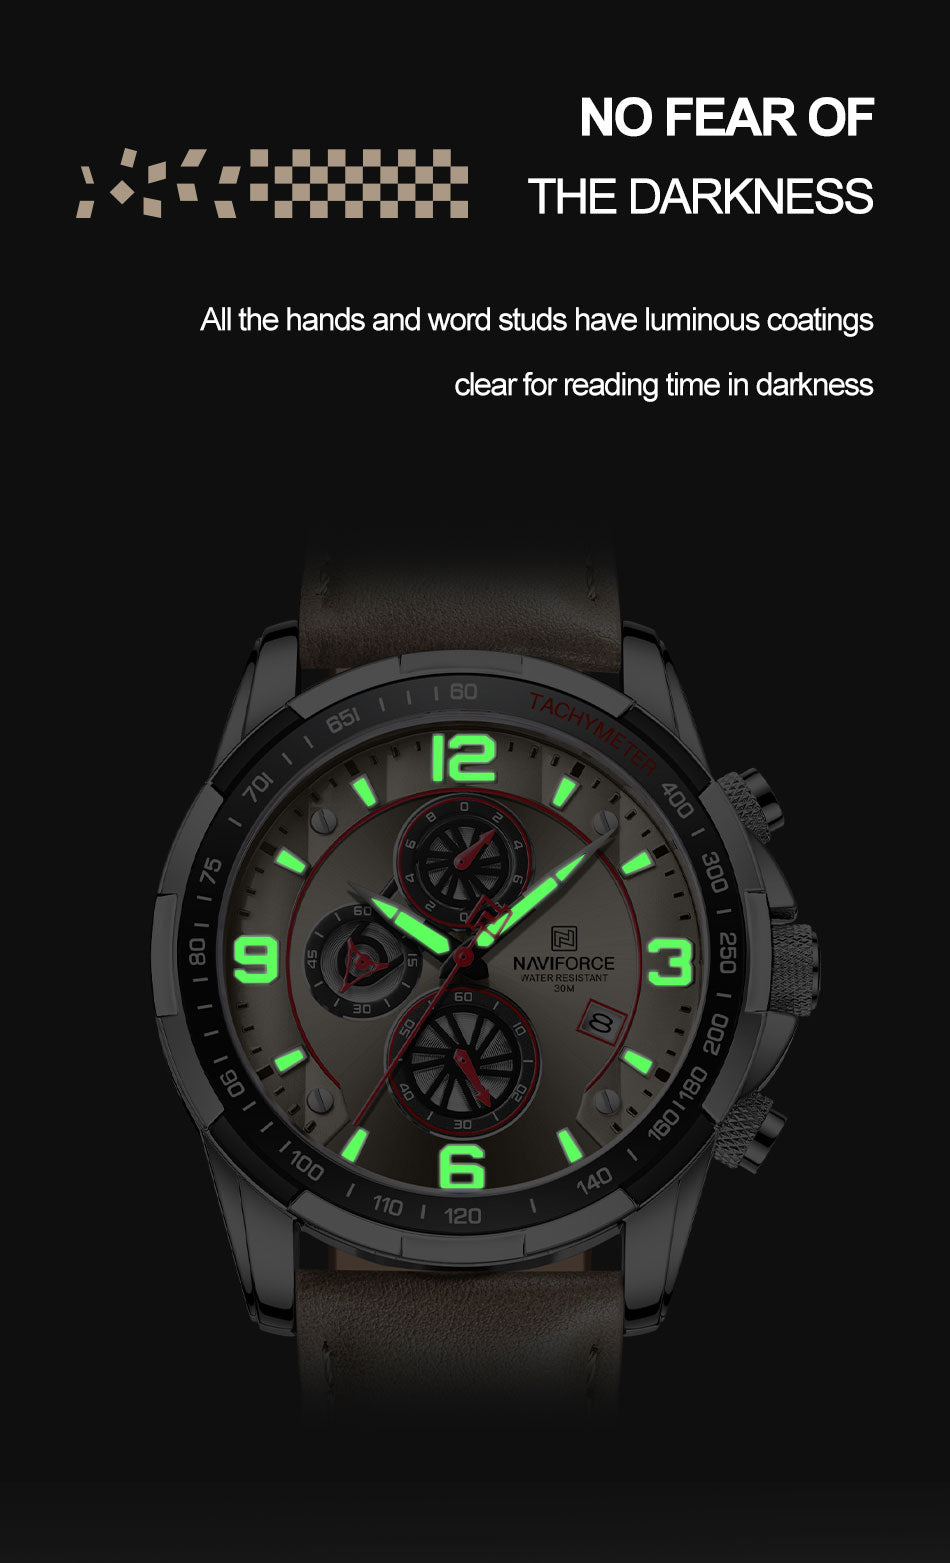 Naviforce 8020 Leather Quartz Chronograph Watch - Grey